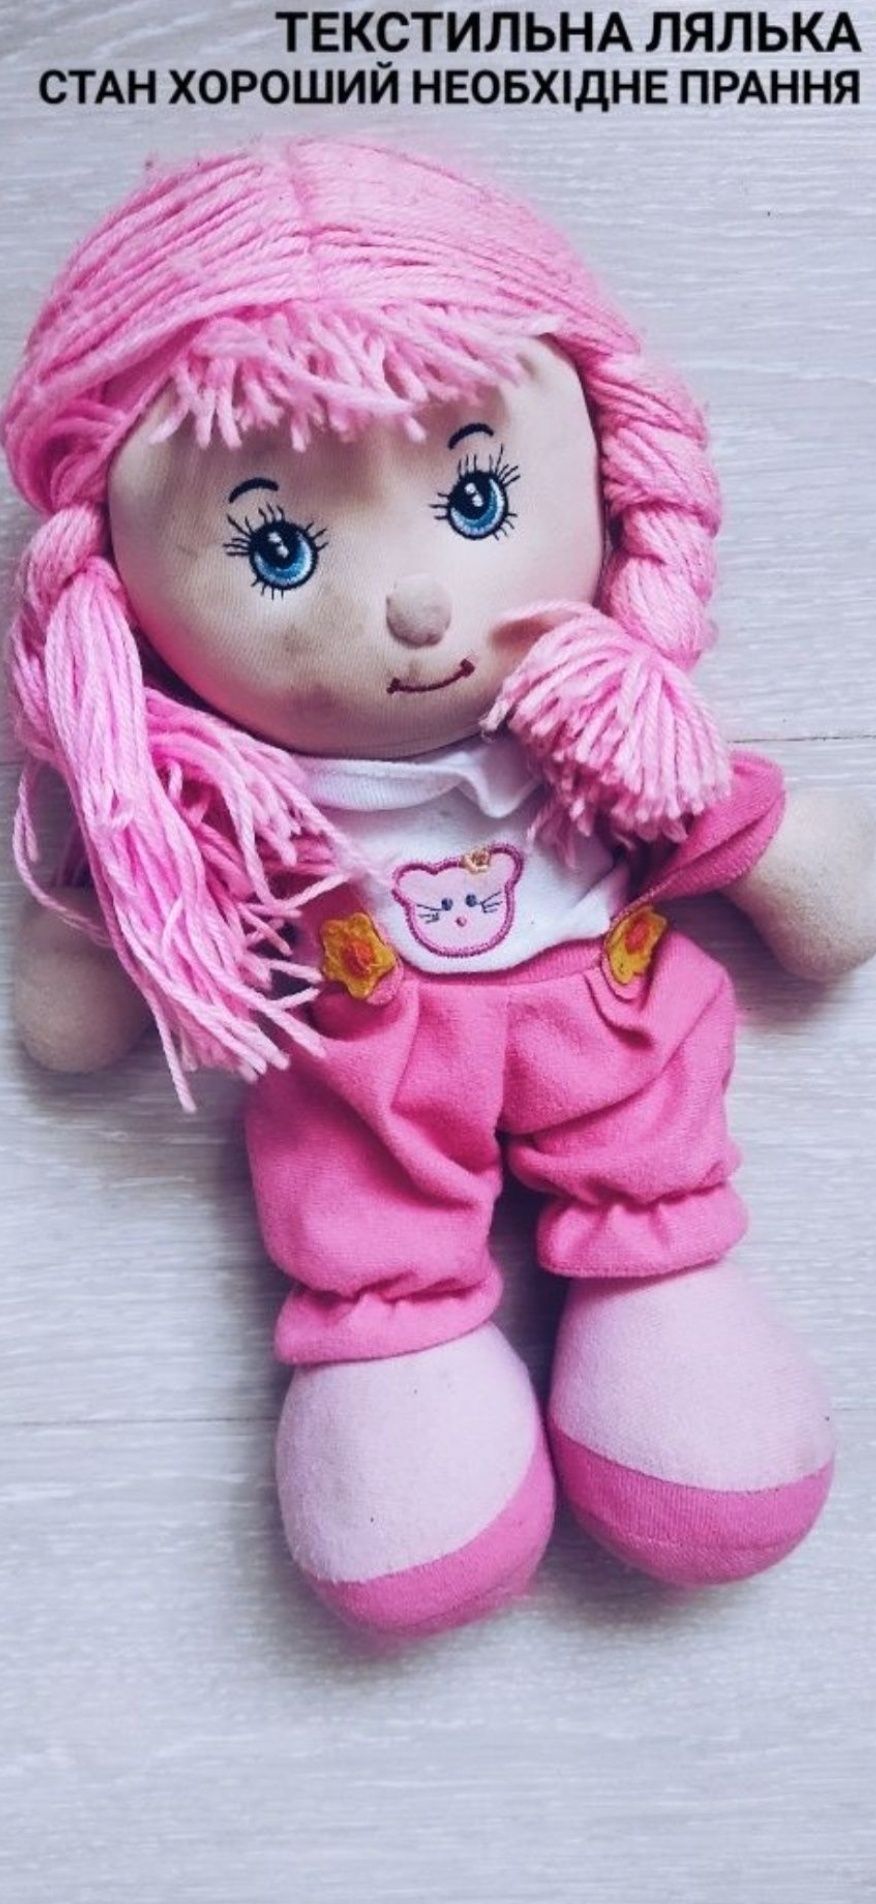 Текстильна лялька